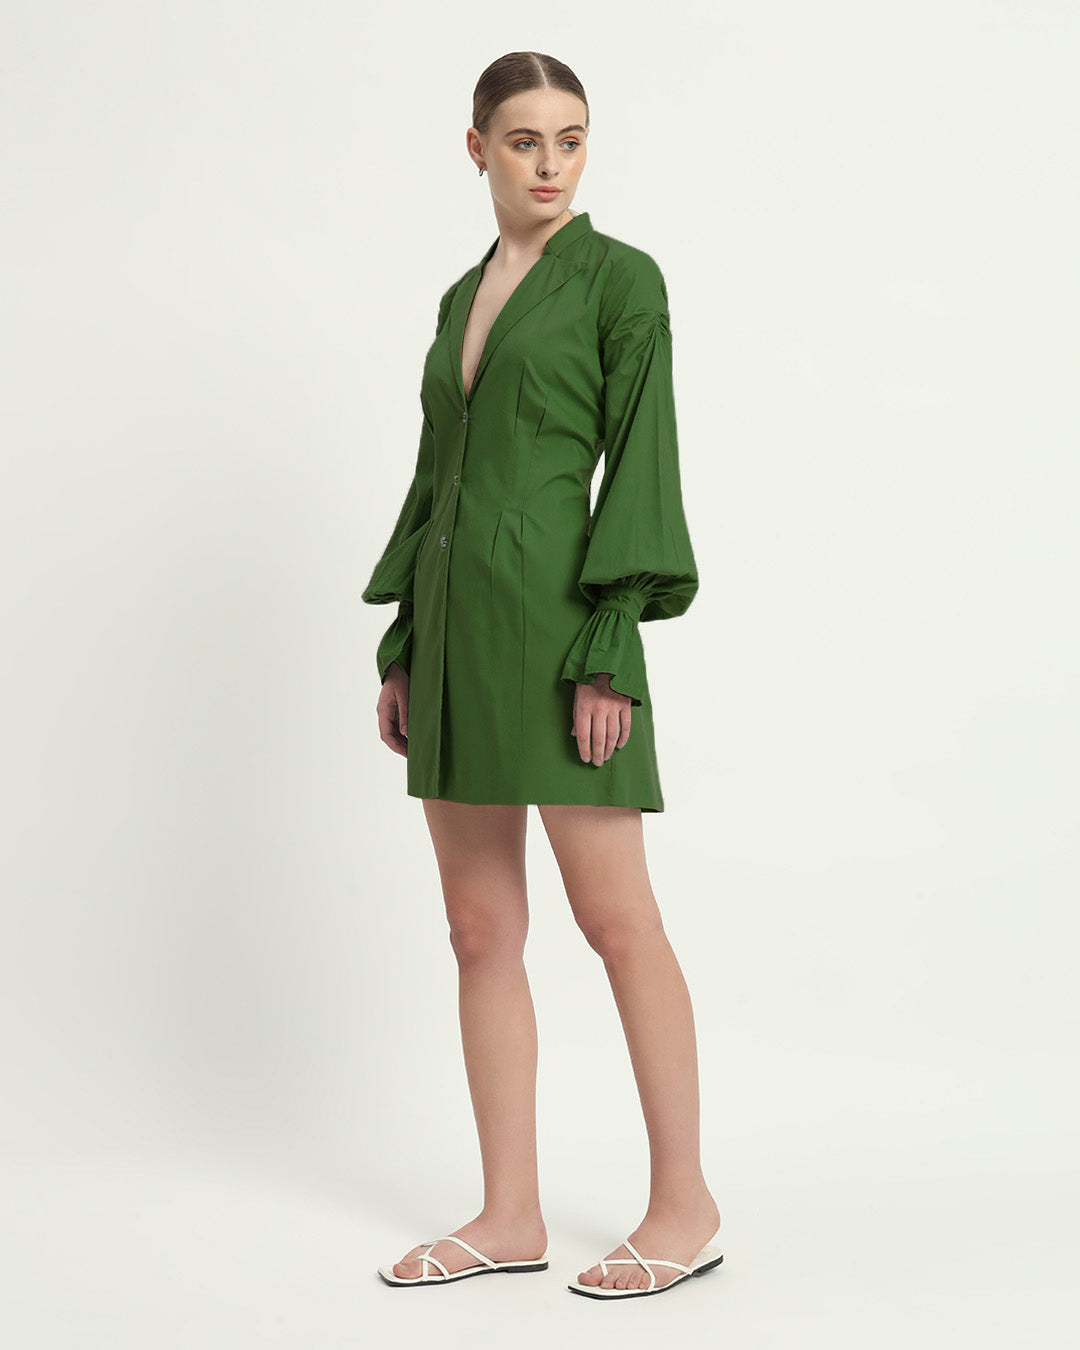 The Sedona Emerald Cotton Dress